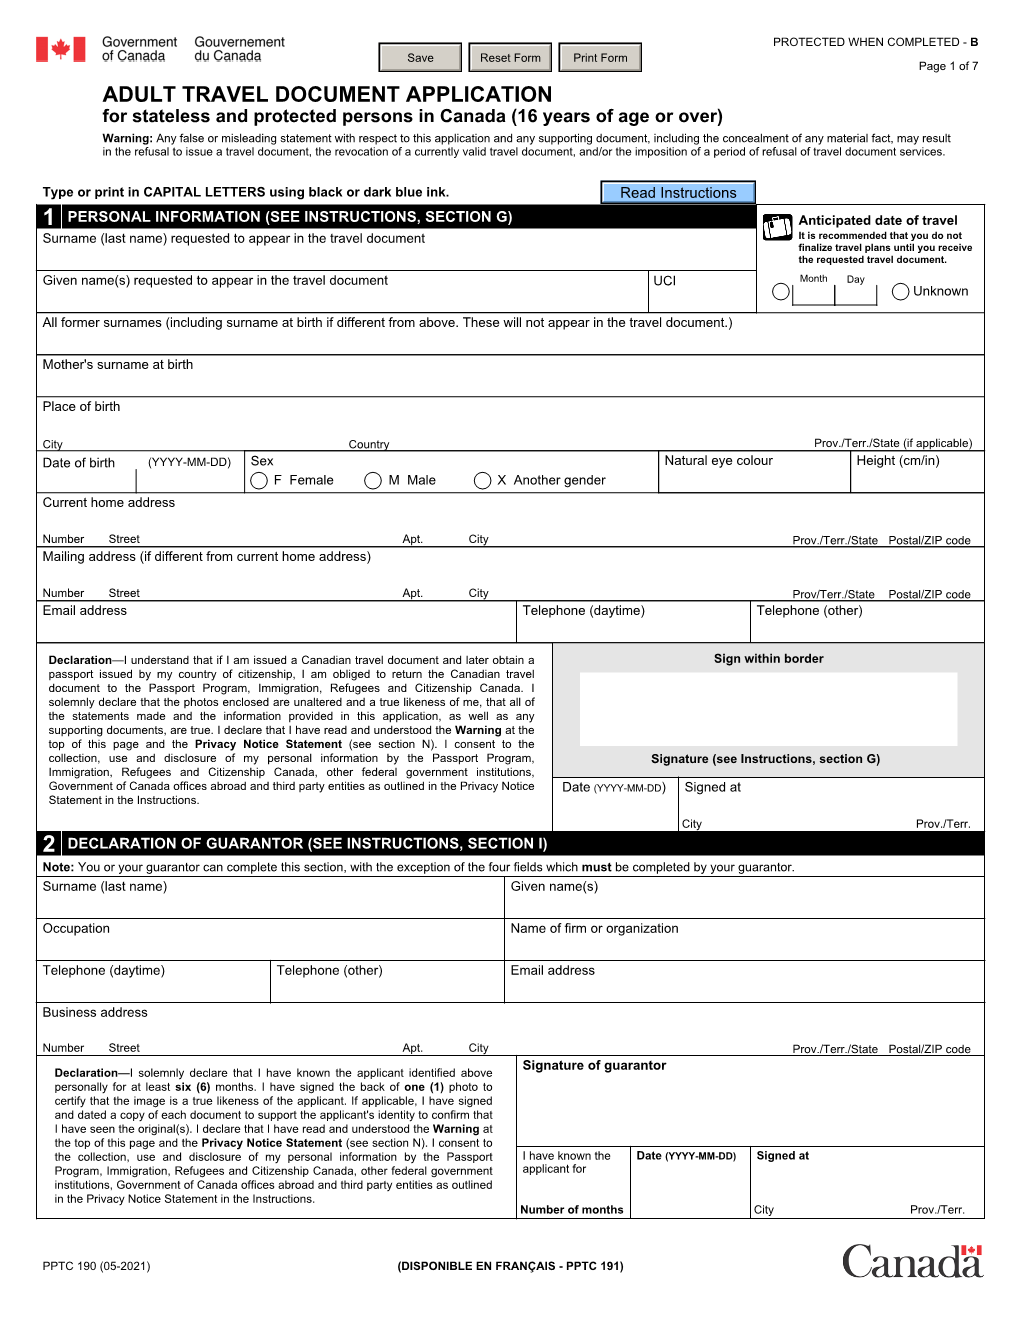 Adult Travel Document Application Form [PPTC 190]